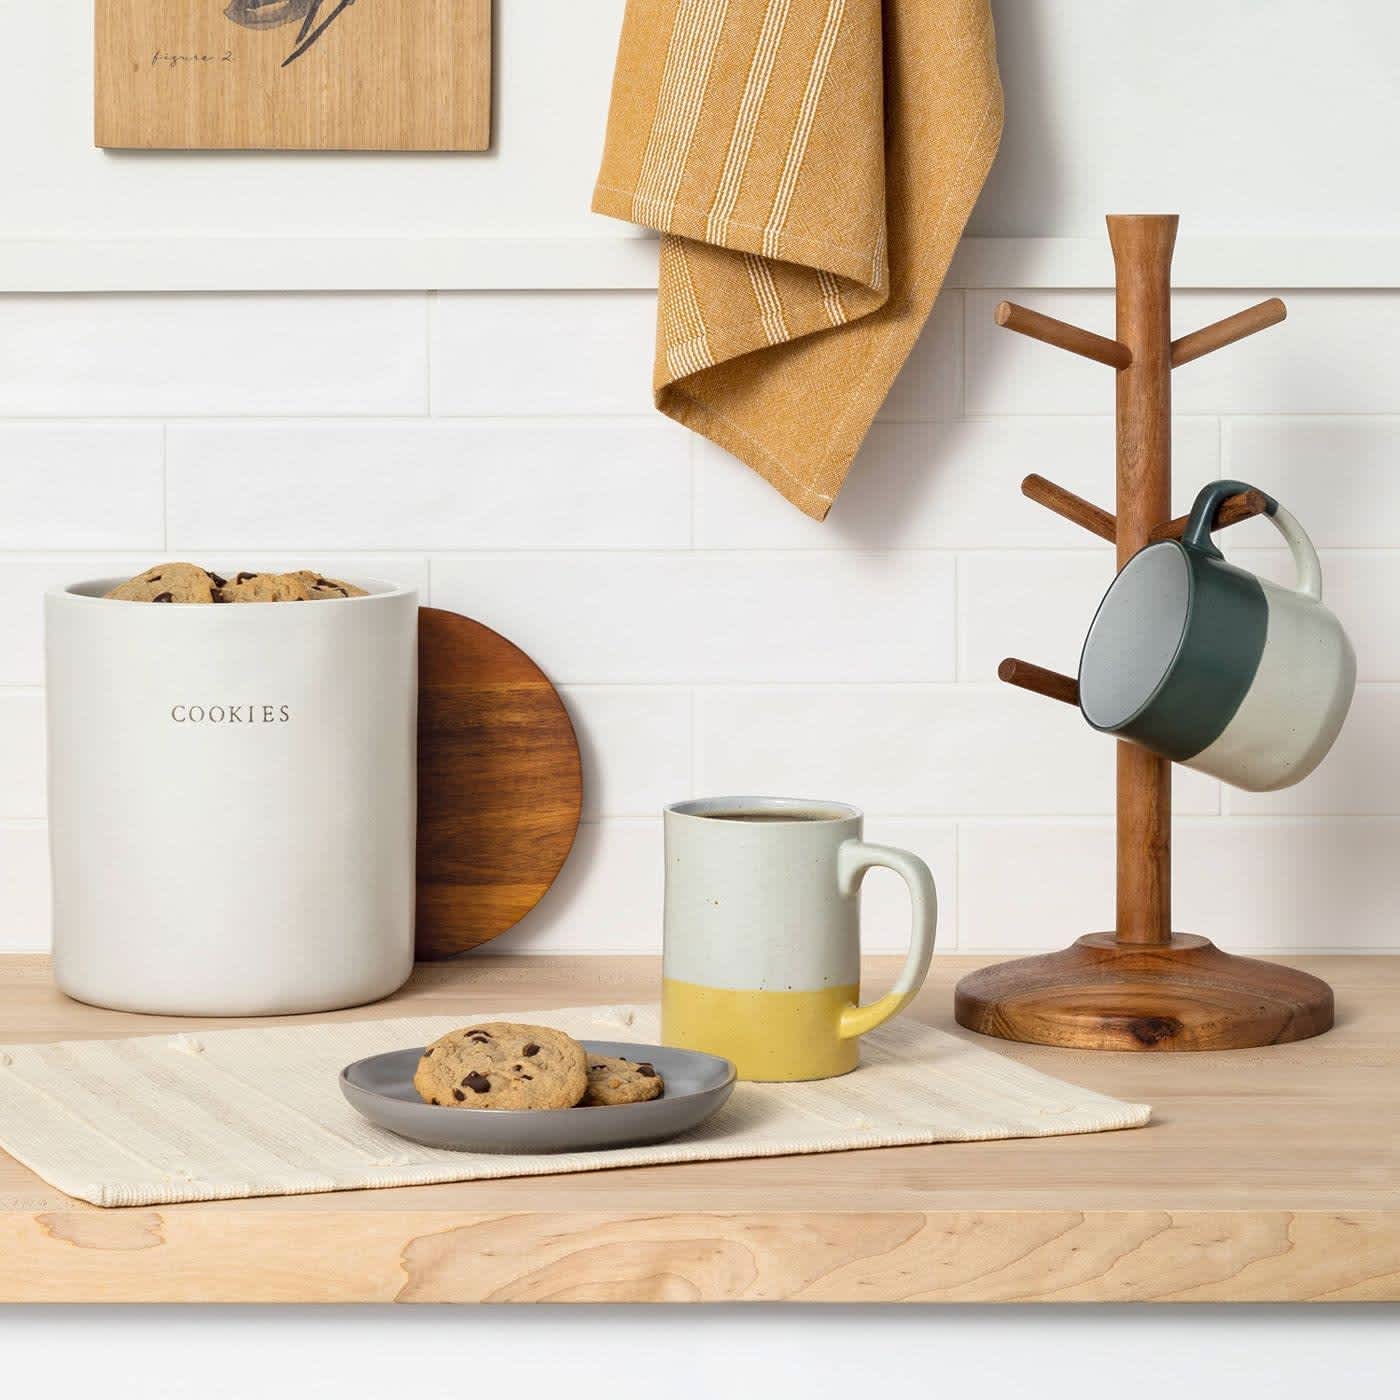 Mug Storage Ideas: Top 20 Brilliant Ways to Organize Your Mugs